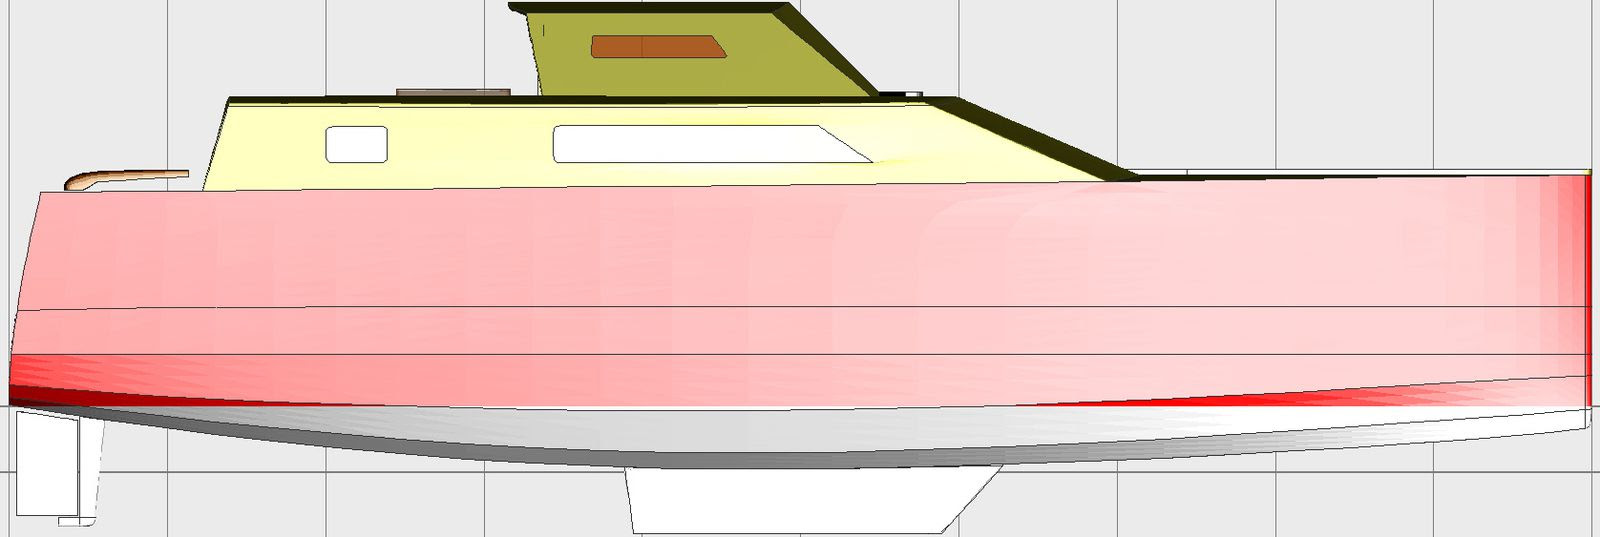 new diy boat: popular plan catamaran cp epoxy